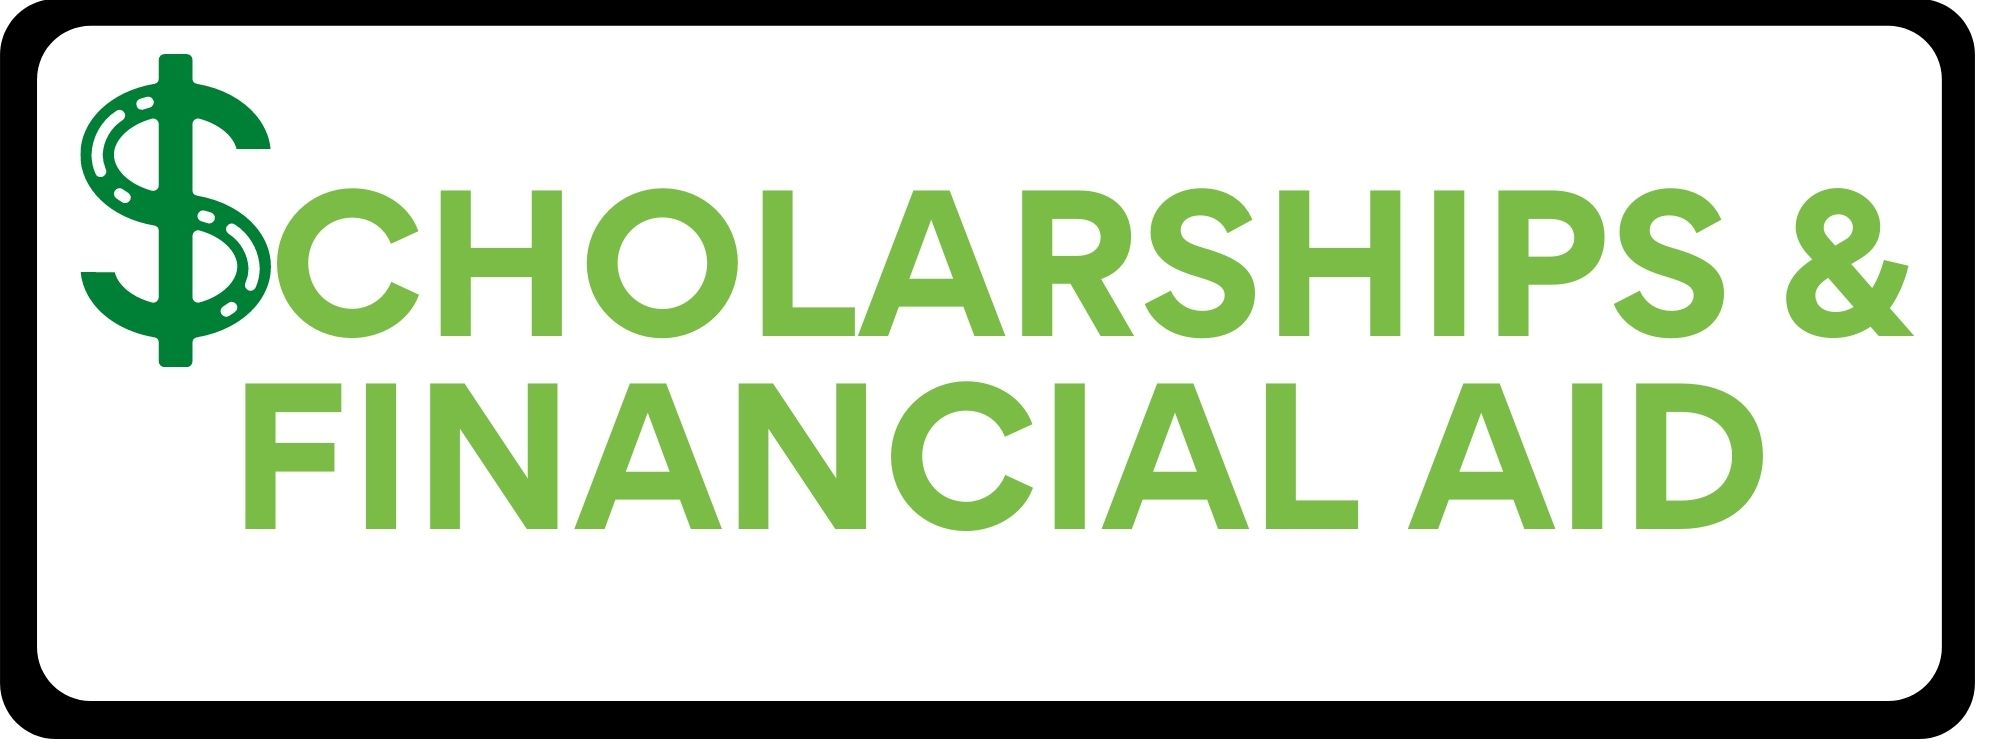 Scholarships Financial Aid